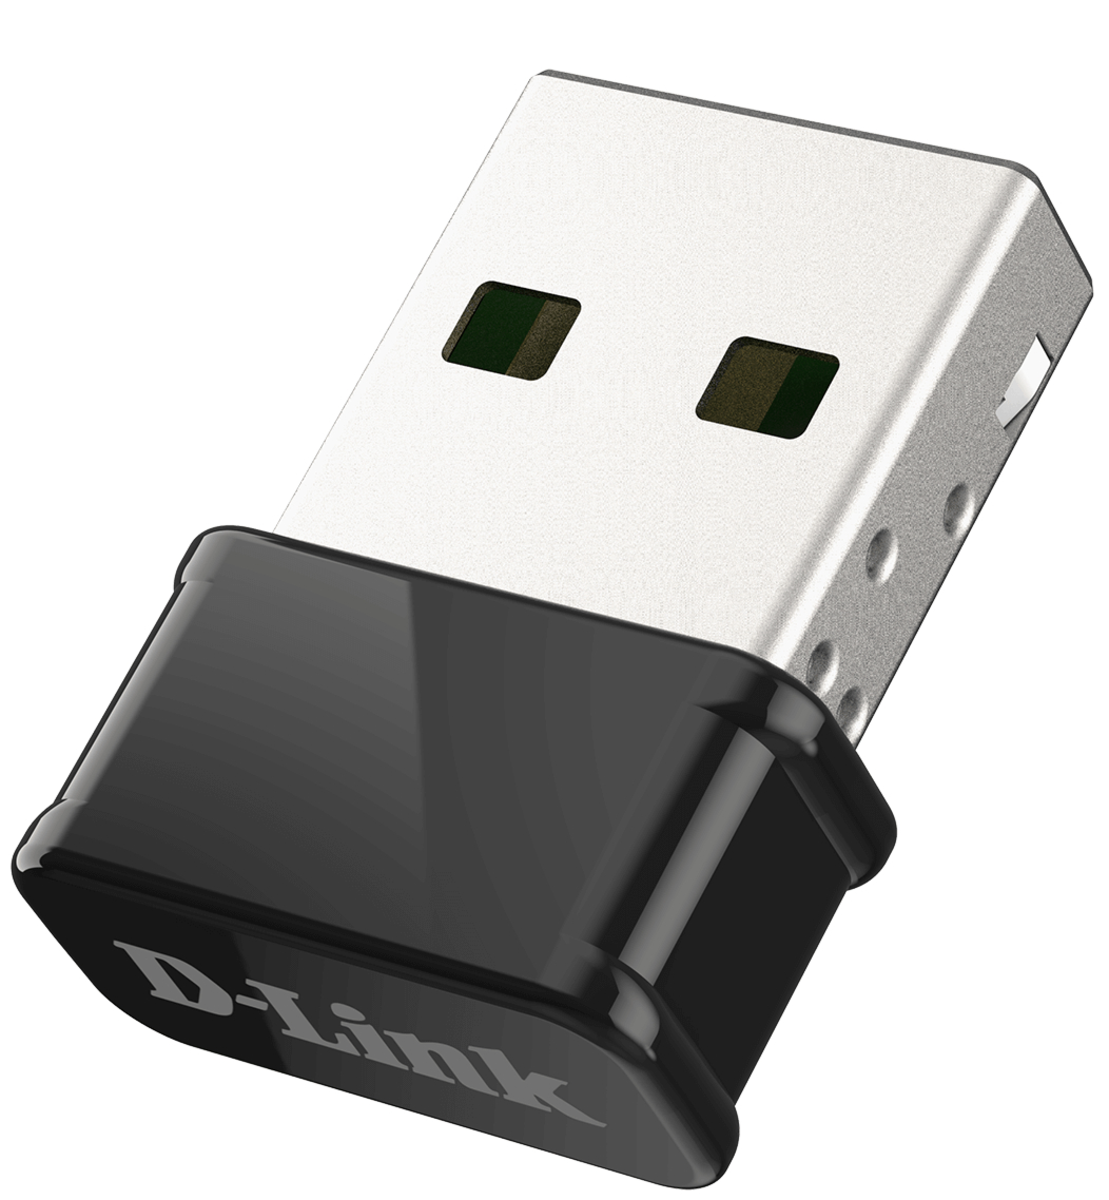 Acheter Clé USB wifi Hama Nano 600 (00053310)